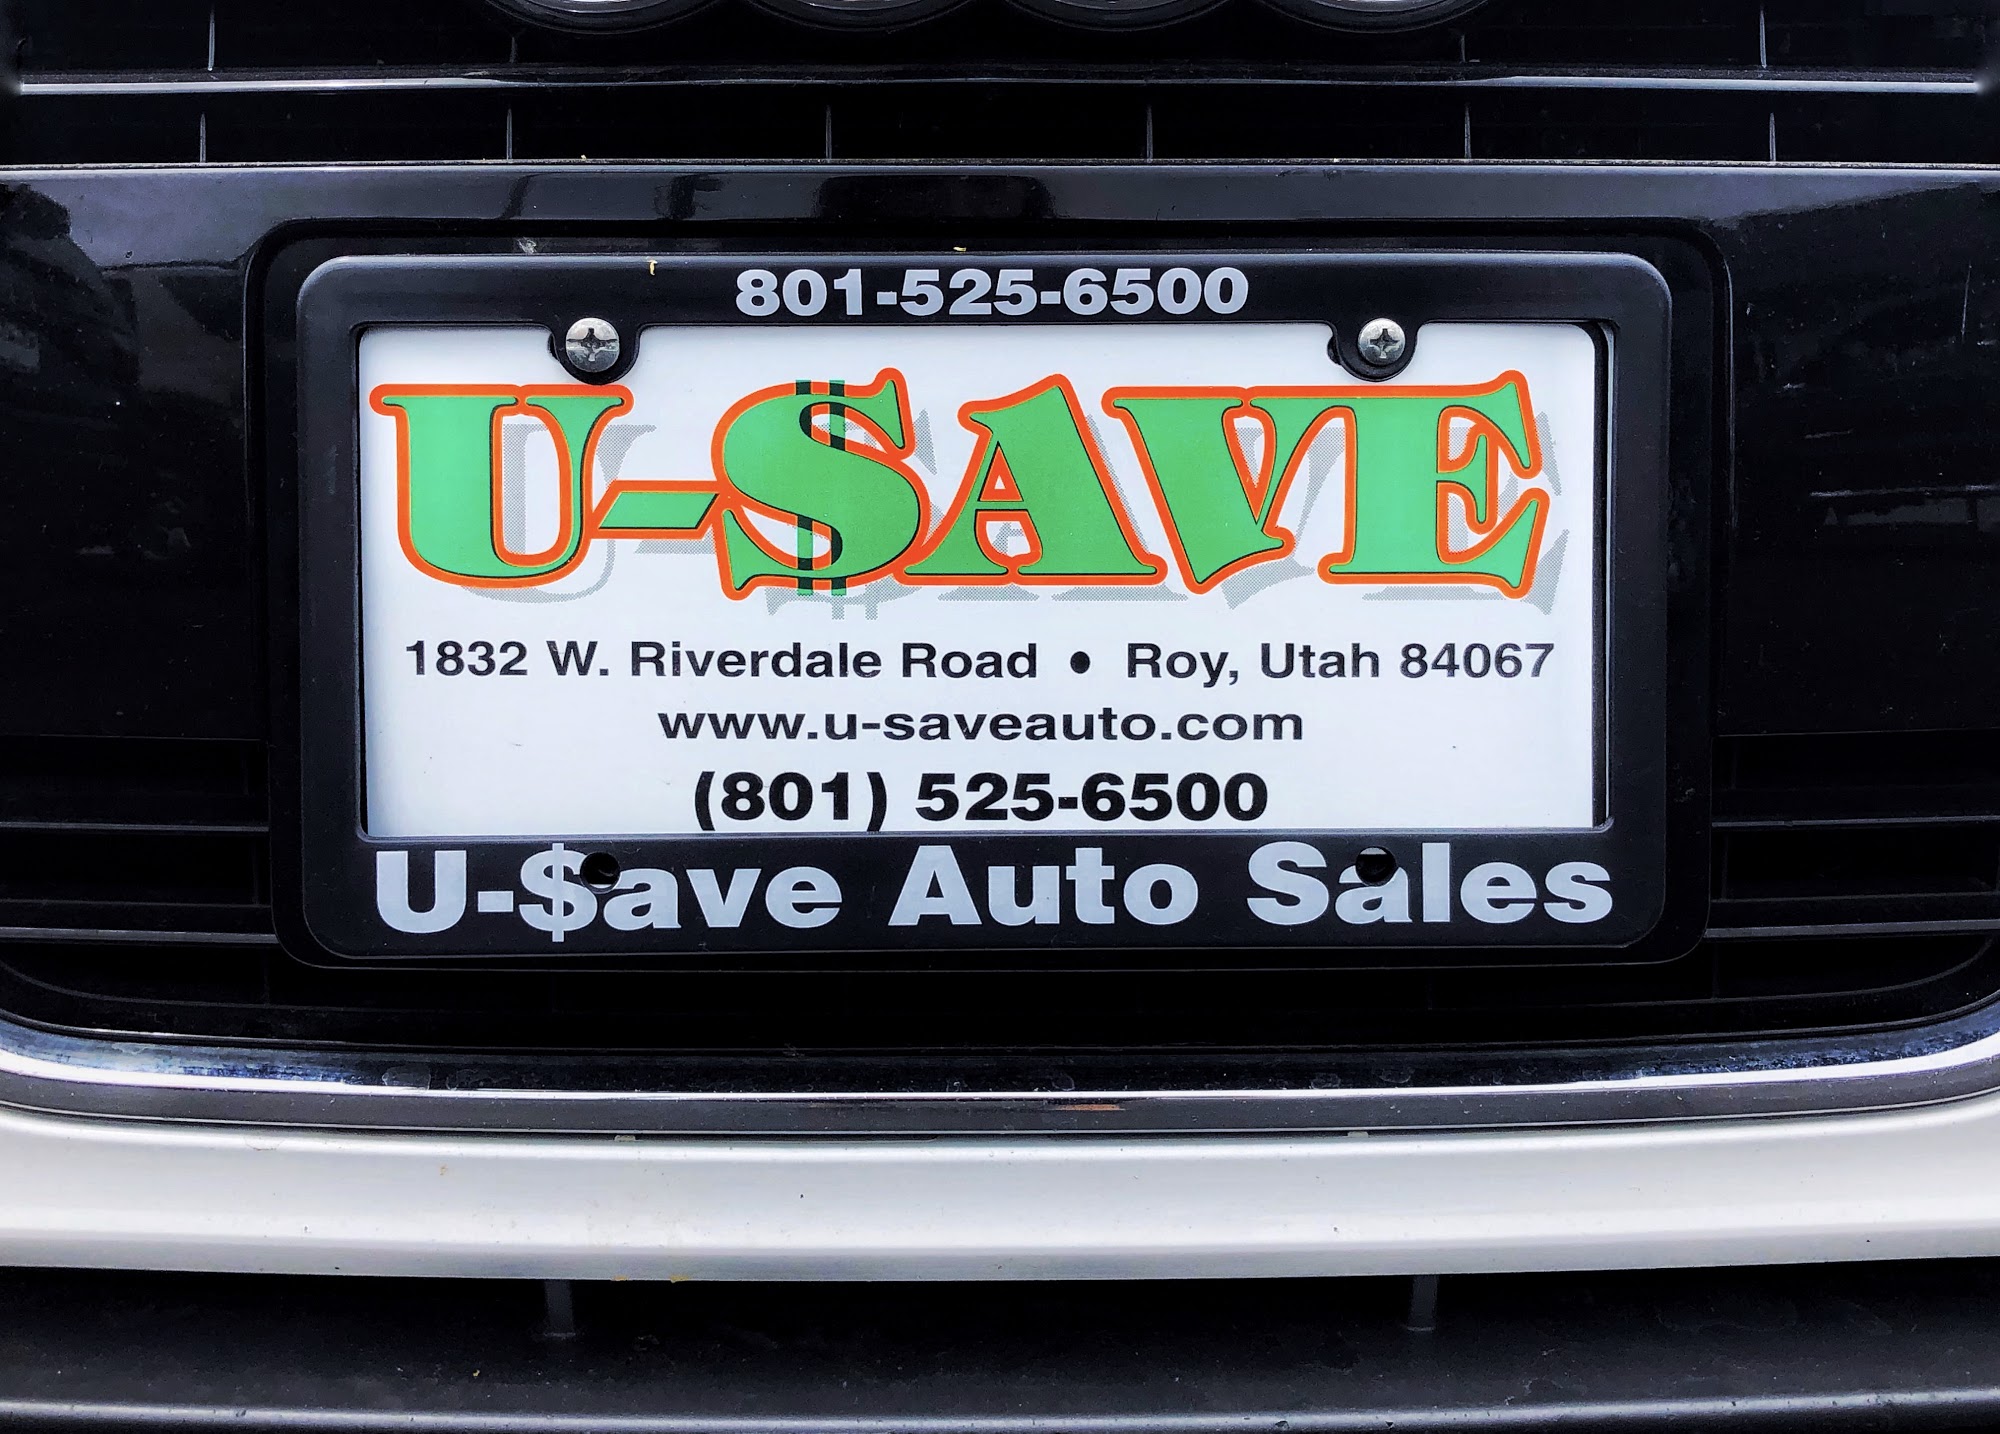 U-Save Auto Sales